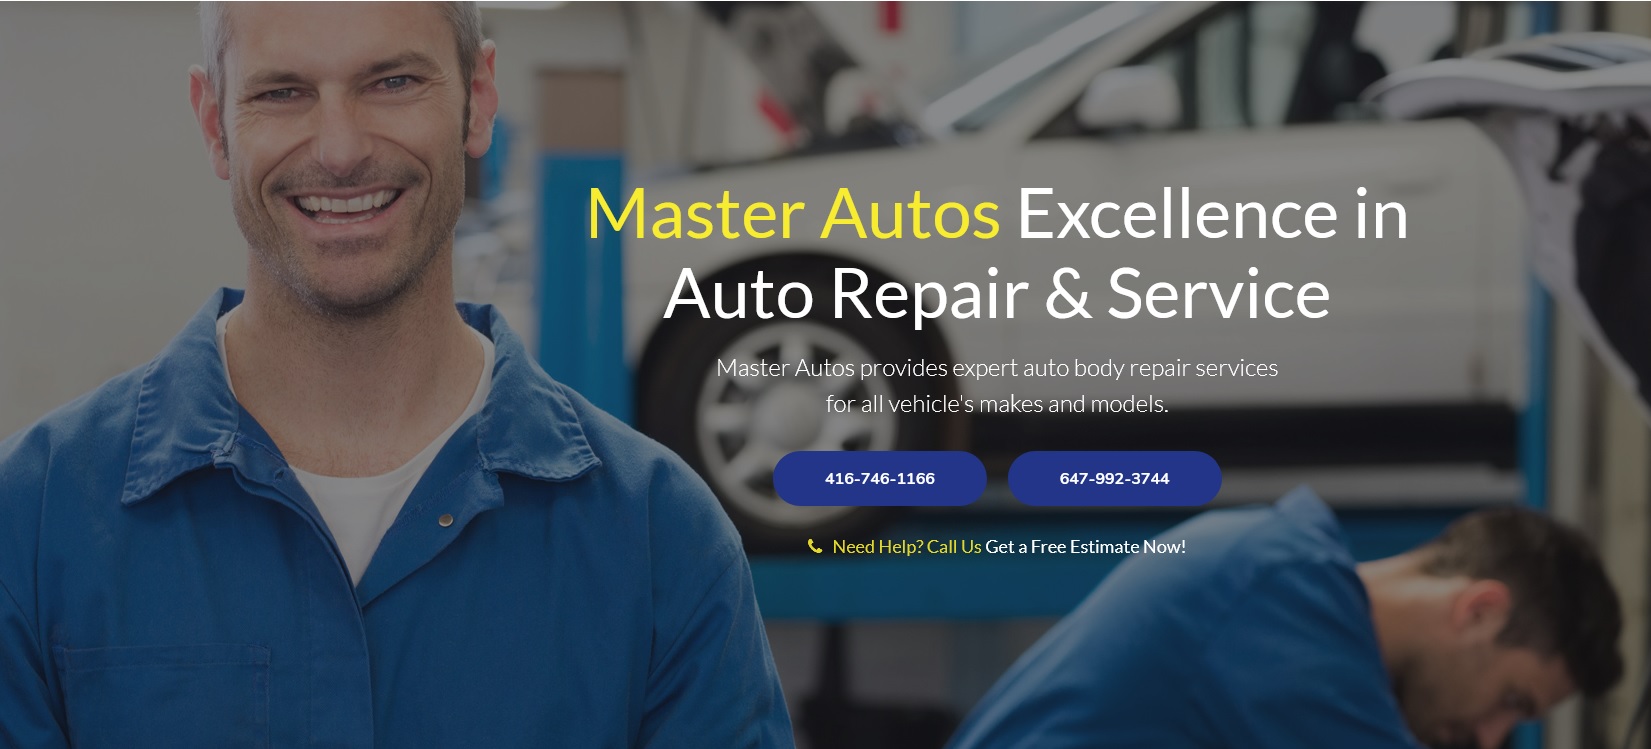 Master Autos - Auto Repair & Service Toronto